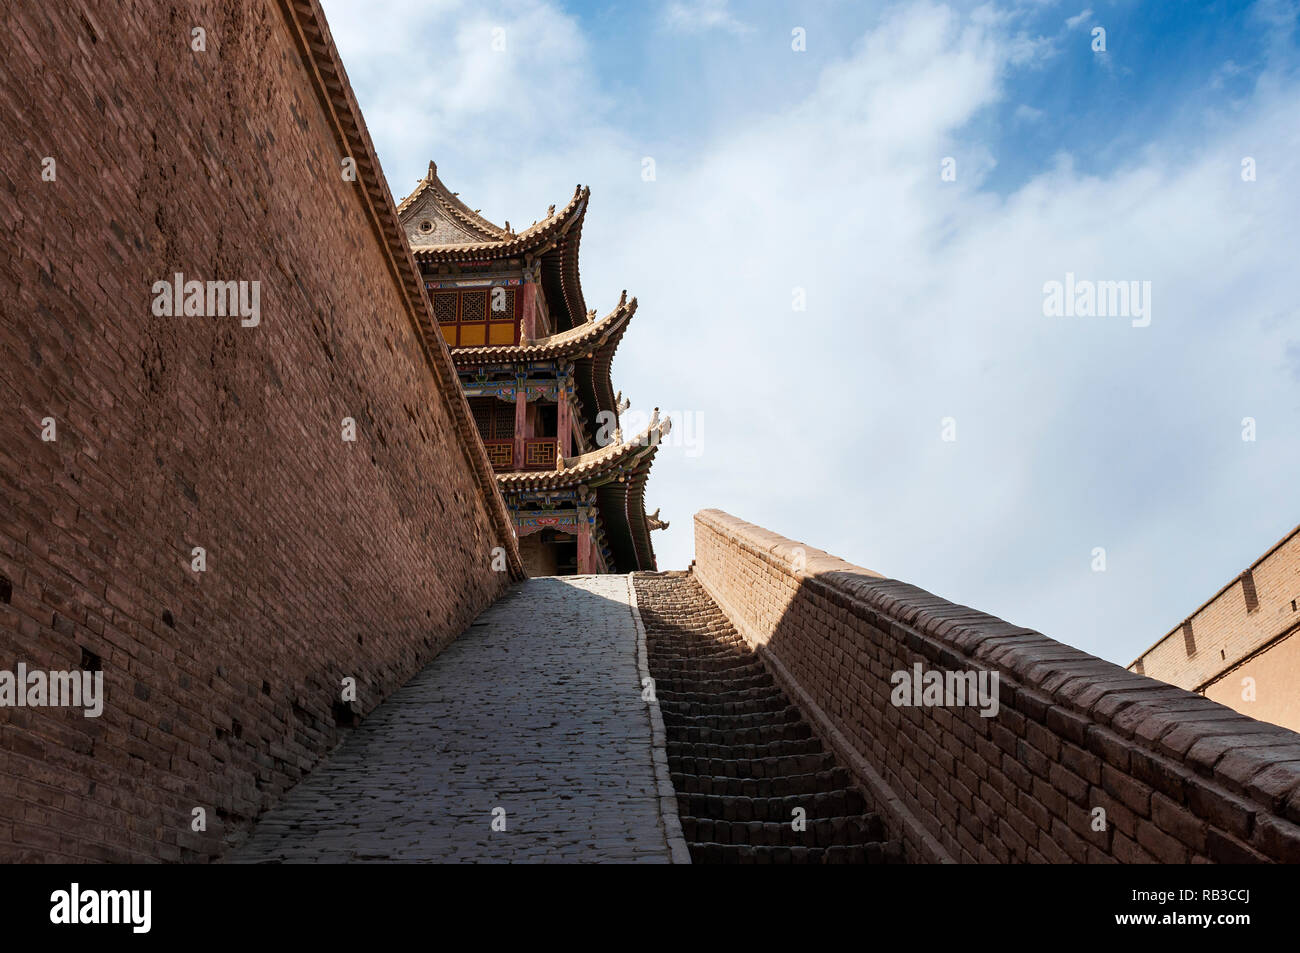 Dettaglio di una torre della Jiayuguan Fort nei pressi della città di Jiayuguan nella provincia di Gansu, Cina Foto Stock